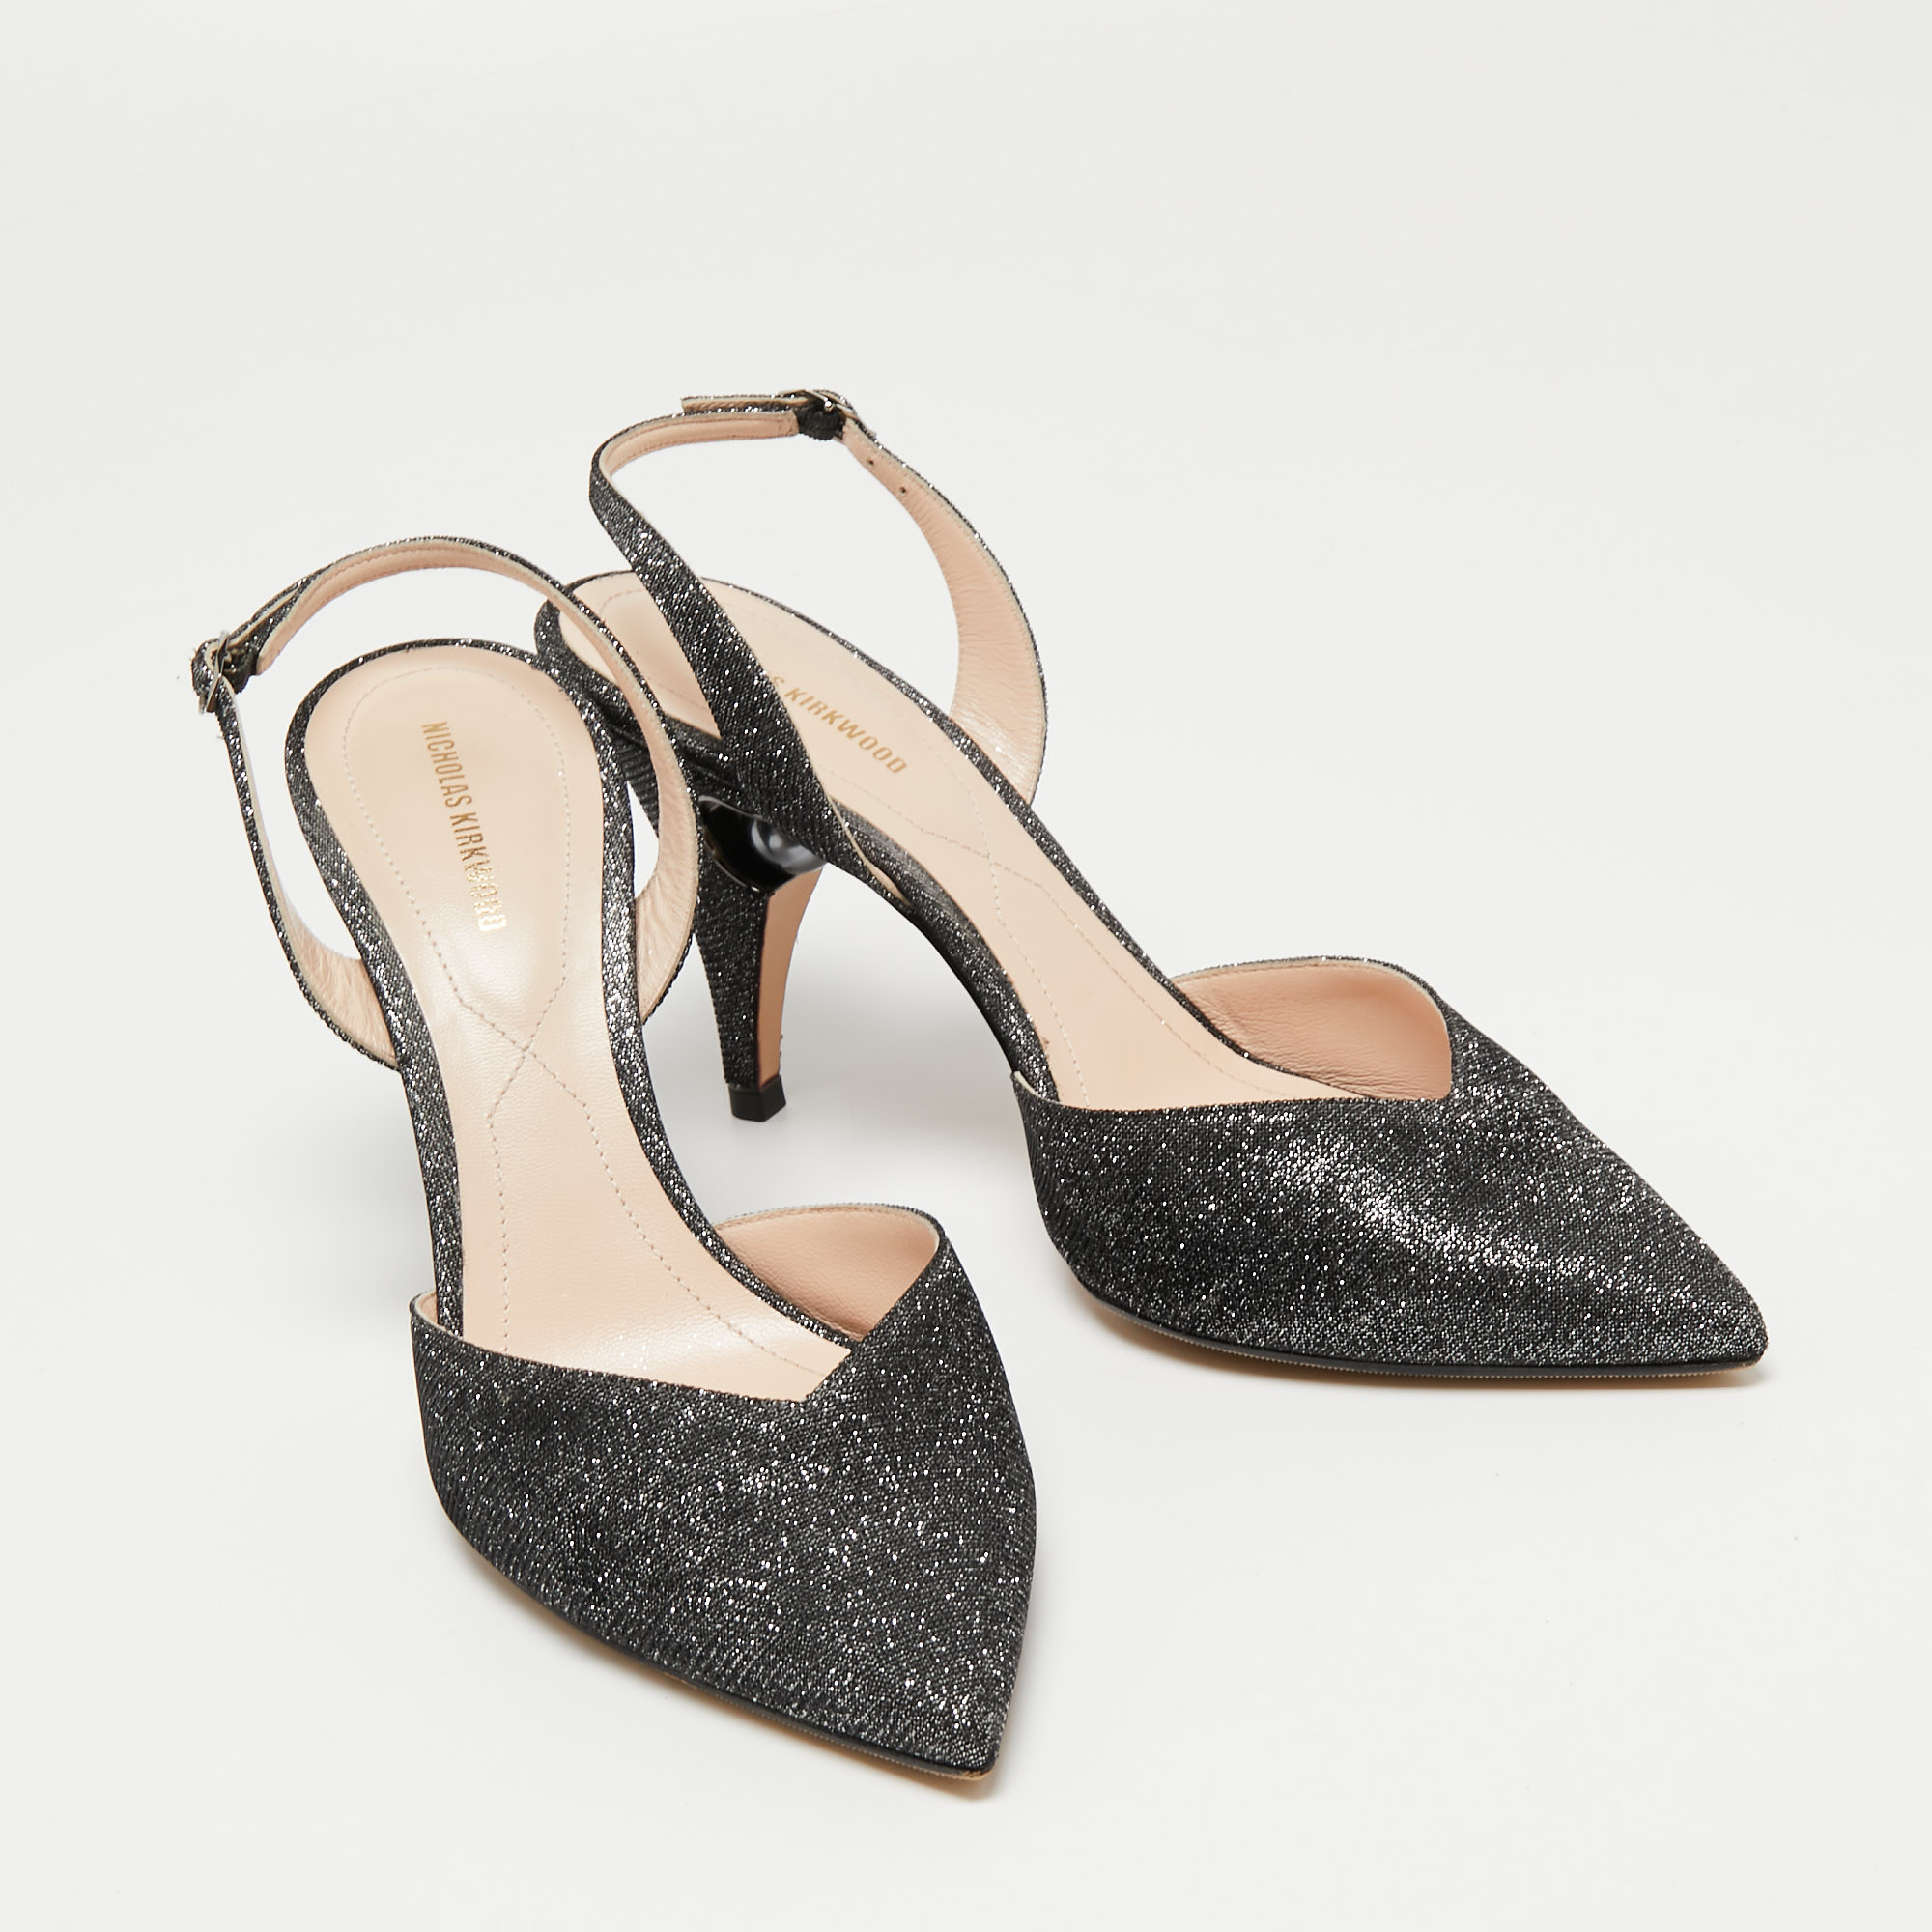 Nicholas Kirkwood Metallic Silver/Black Glitter Fabric Pearl Embellished Slingback Sandals Size 40